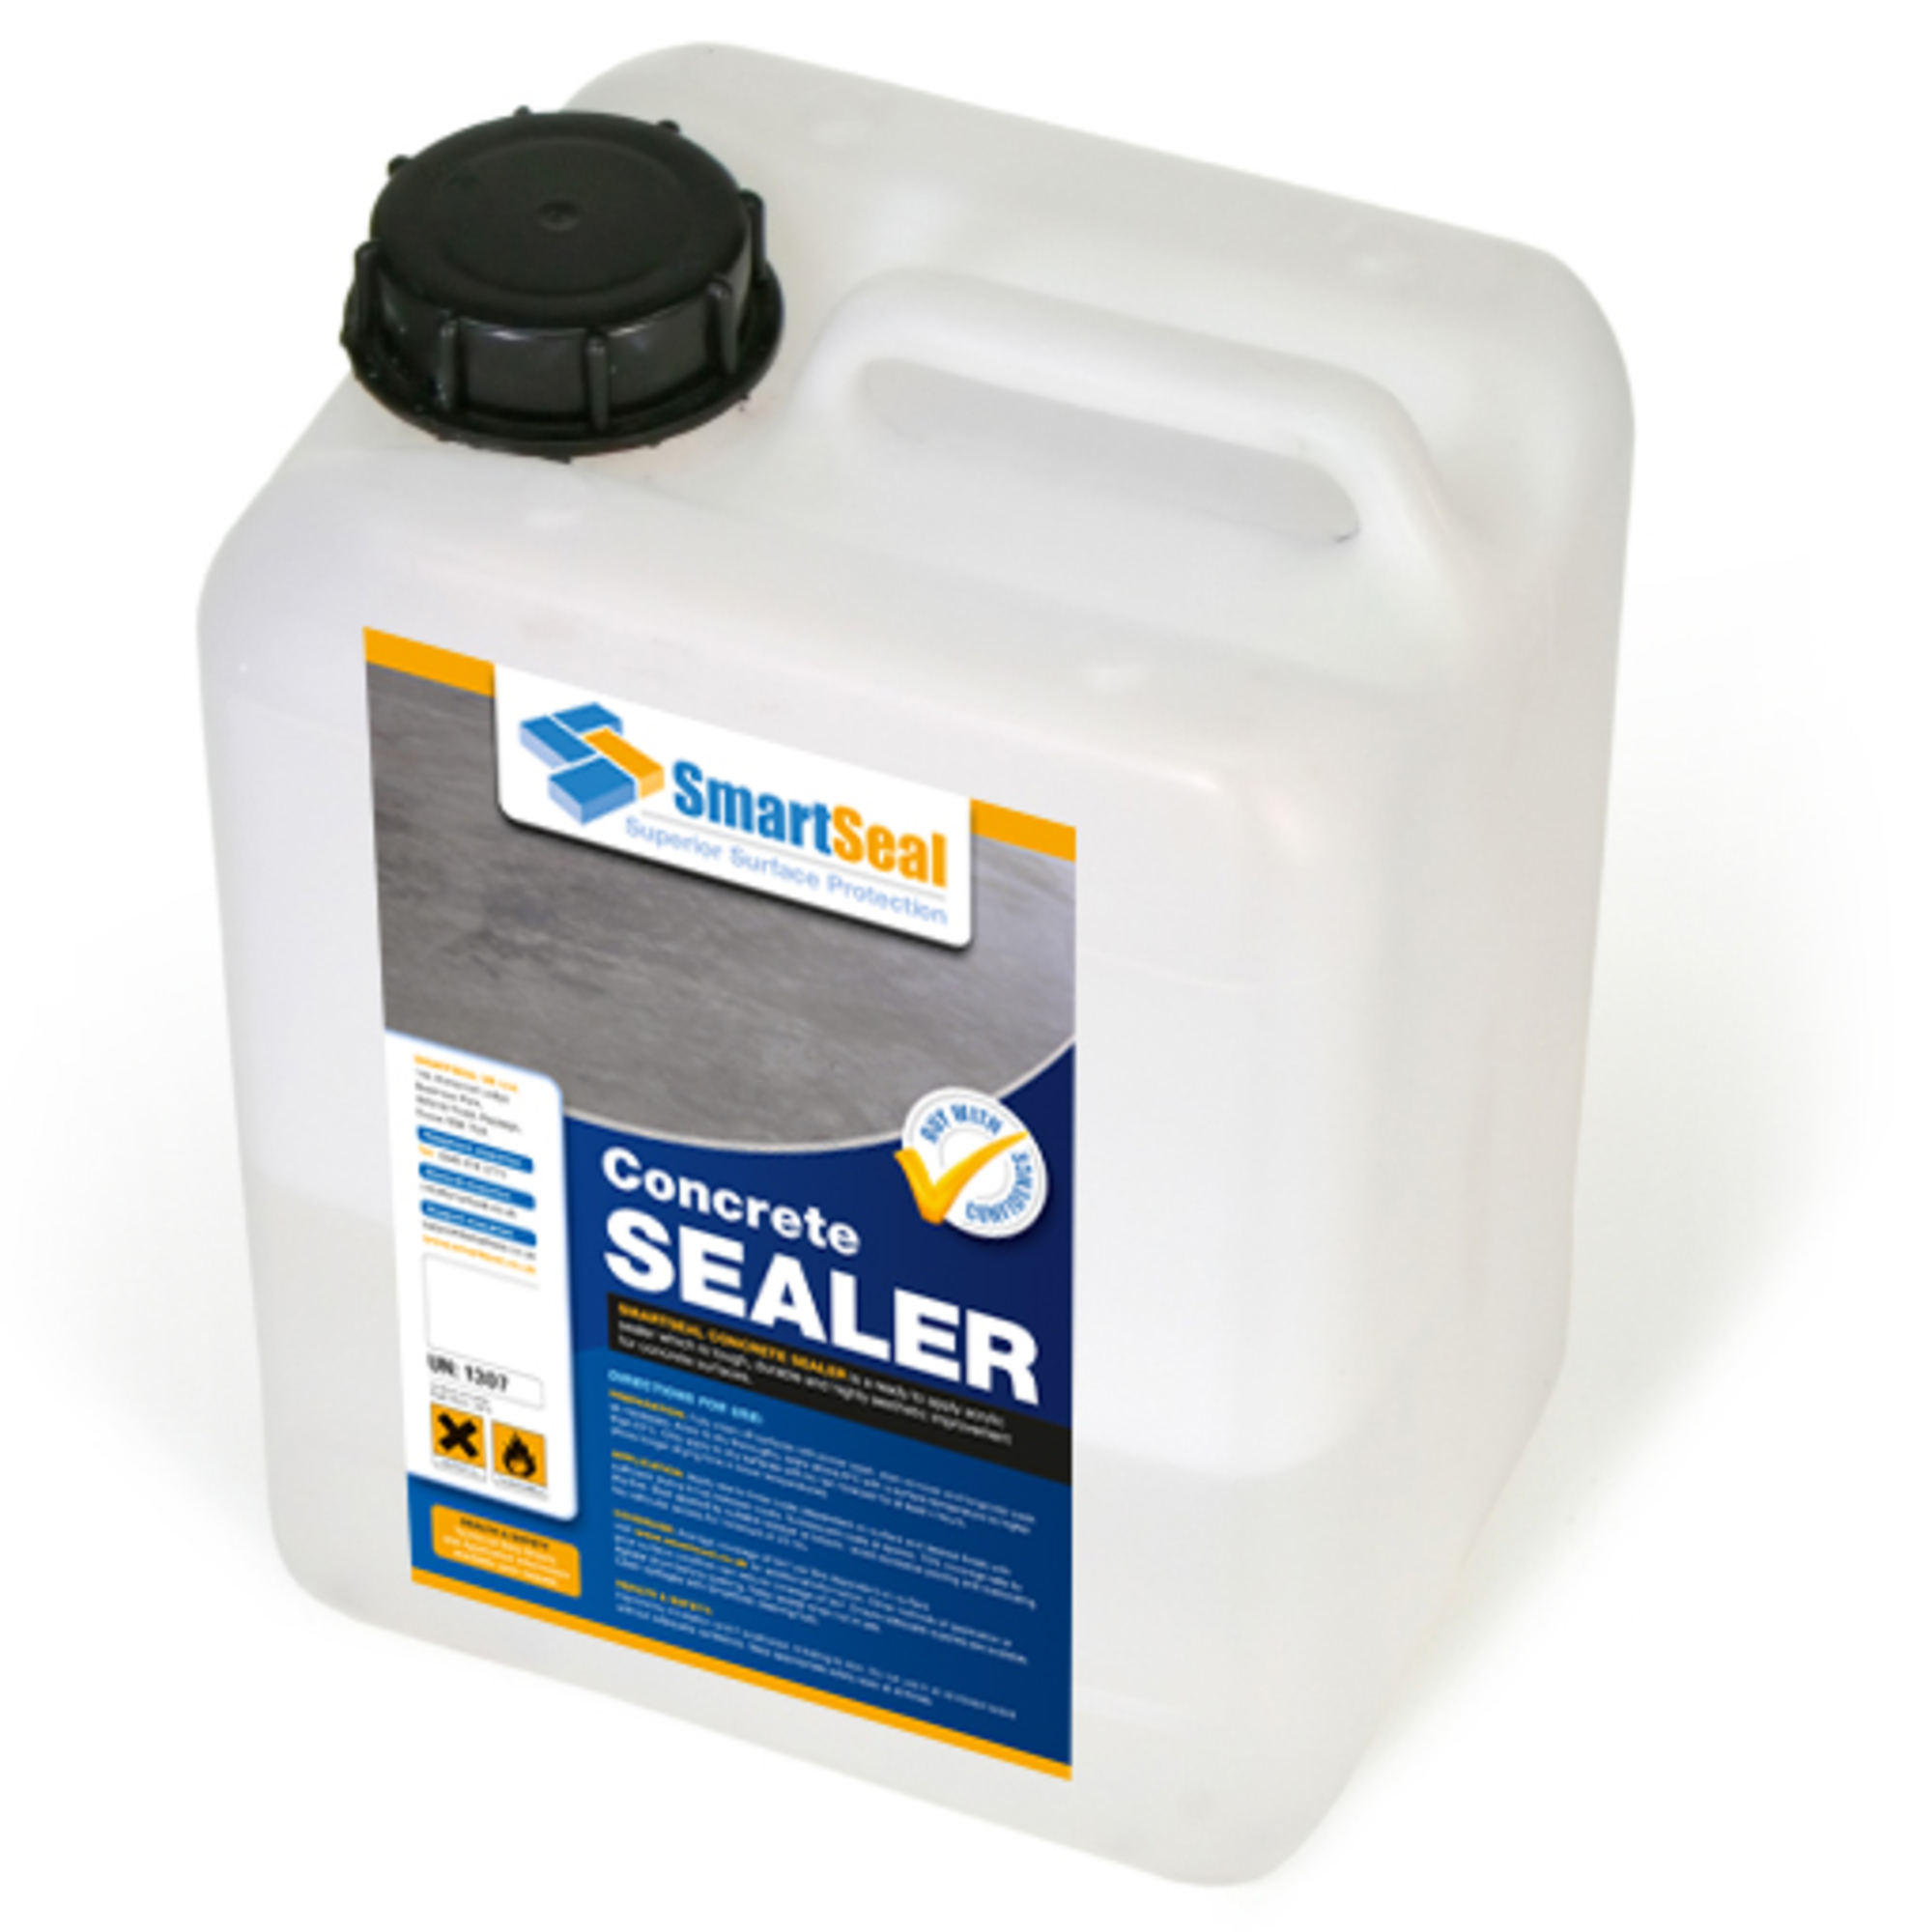 SmartSeal - Concrete Sealer / Concrete Sealant > Concrete Sealer - BBA